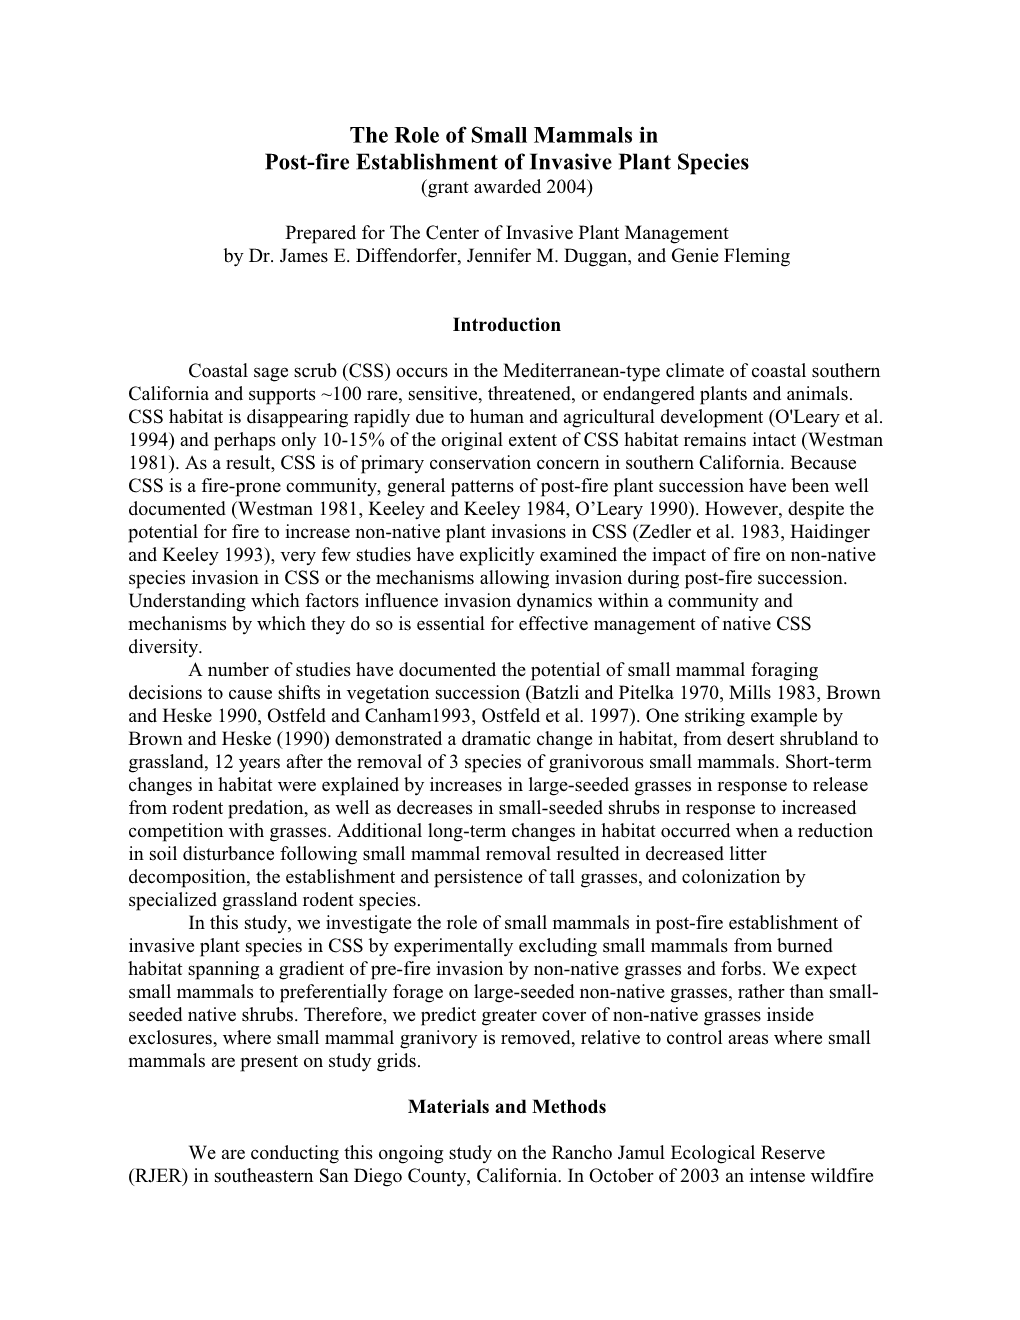 Title- the Role of Small Mammals in Post-Fire Establishment of Invasive Plant Species